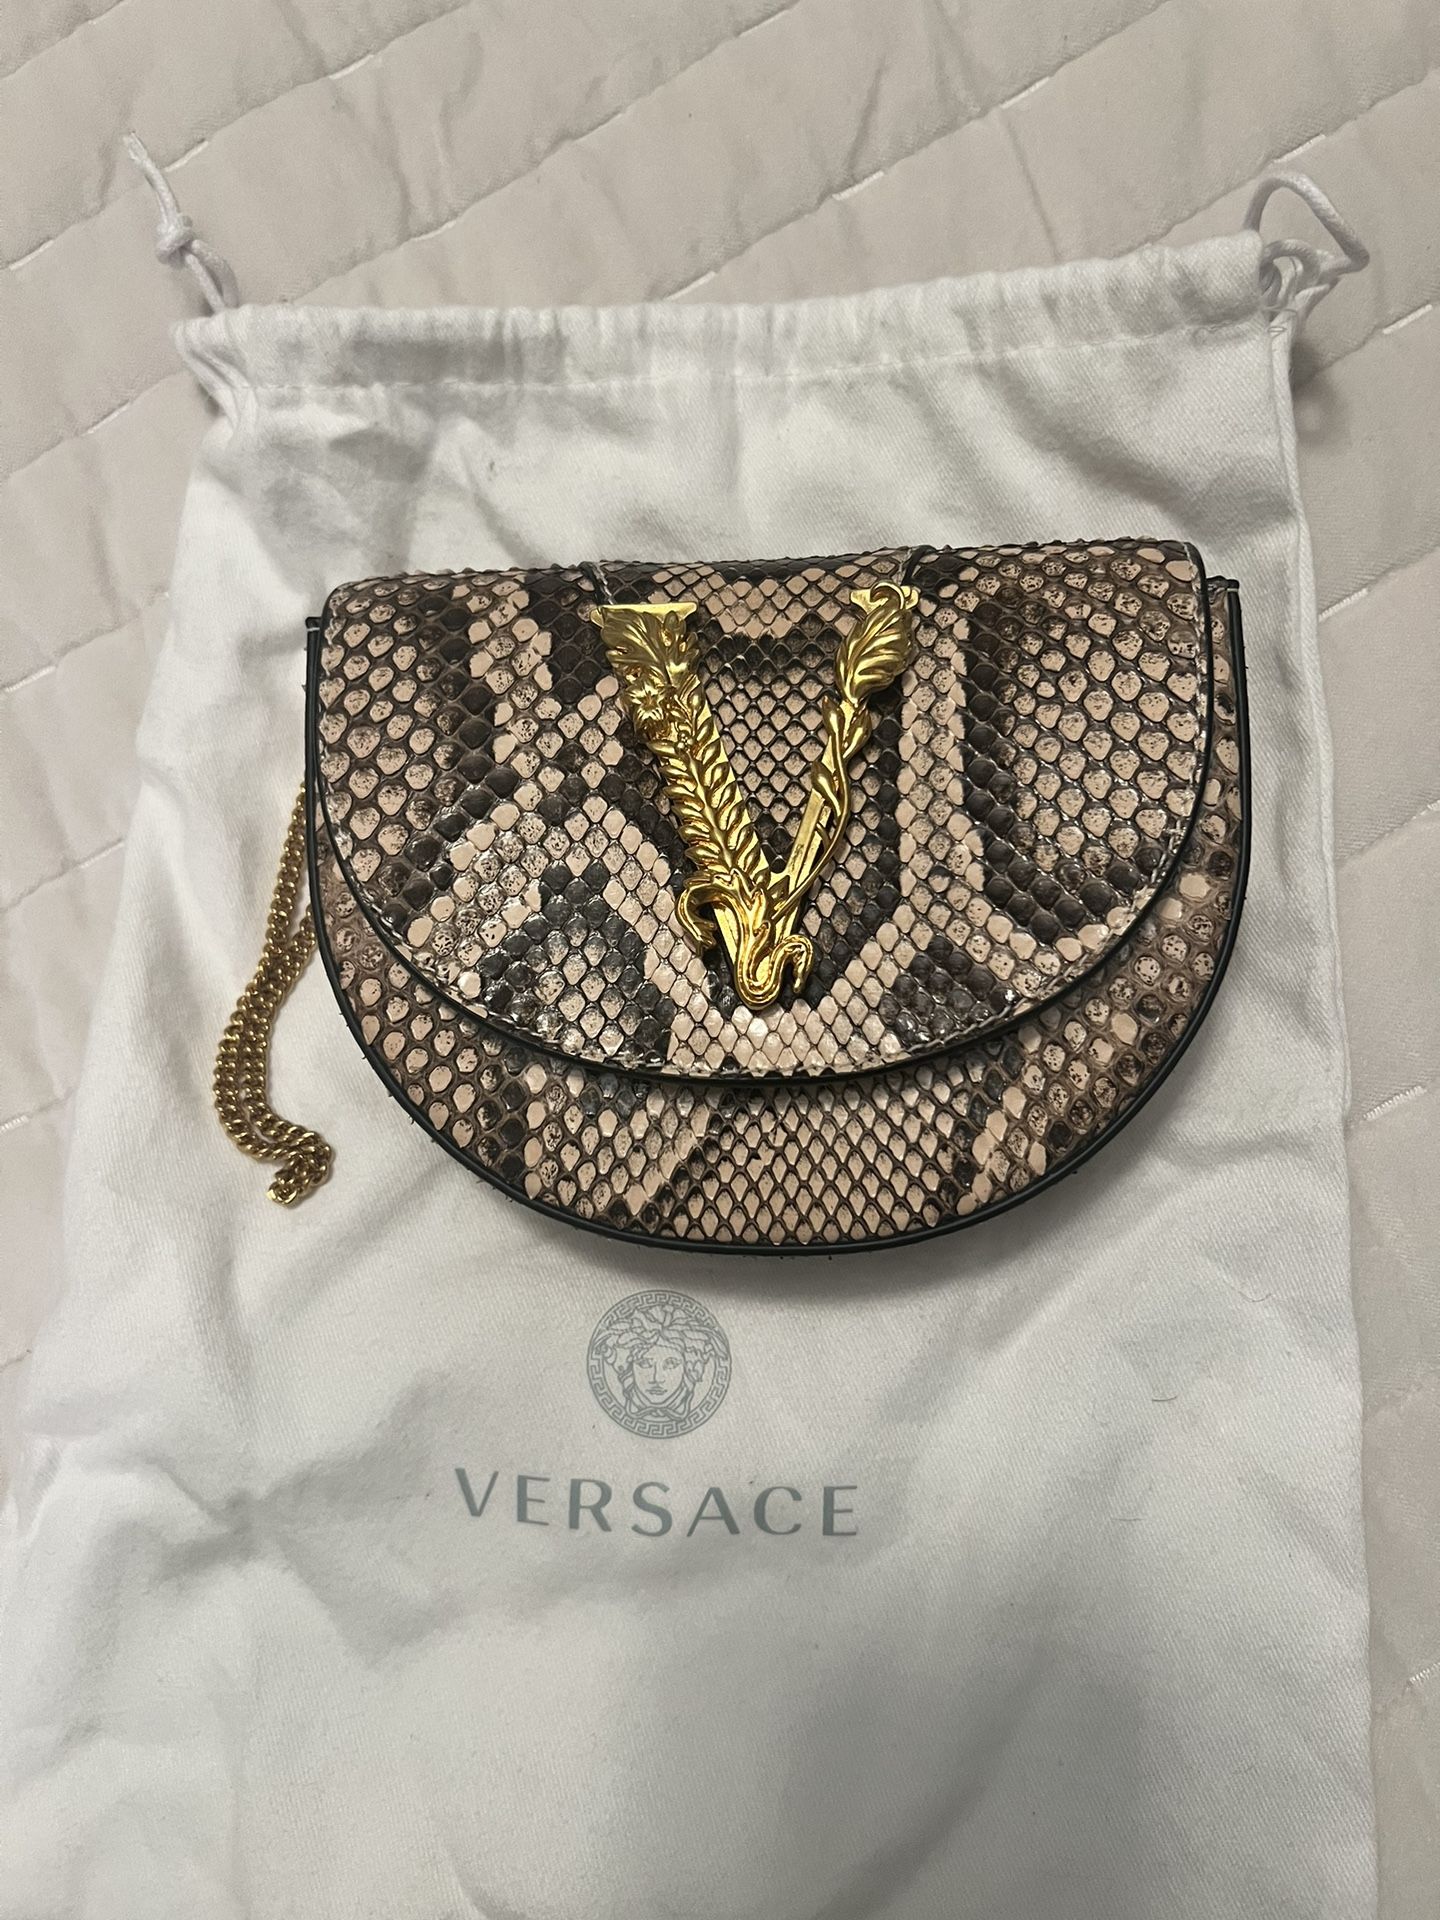 Versace Snake Print Belt Bag. Authentic